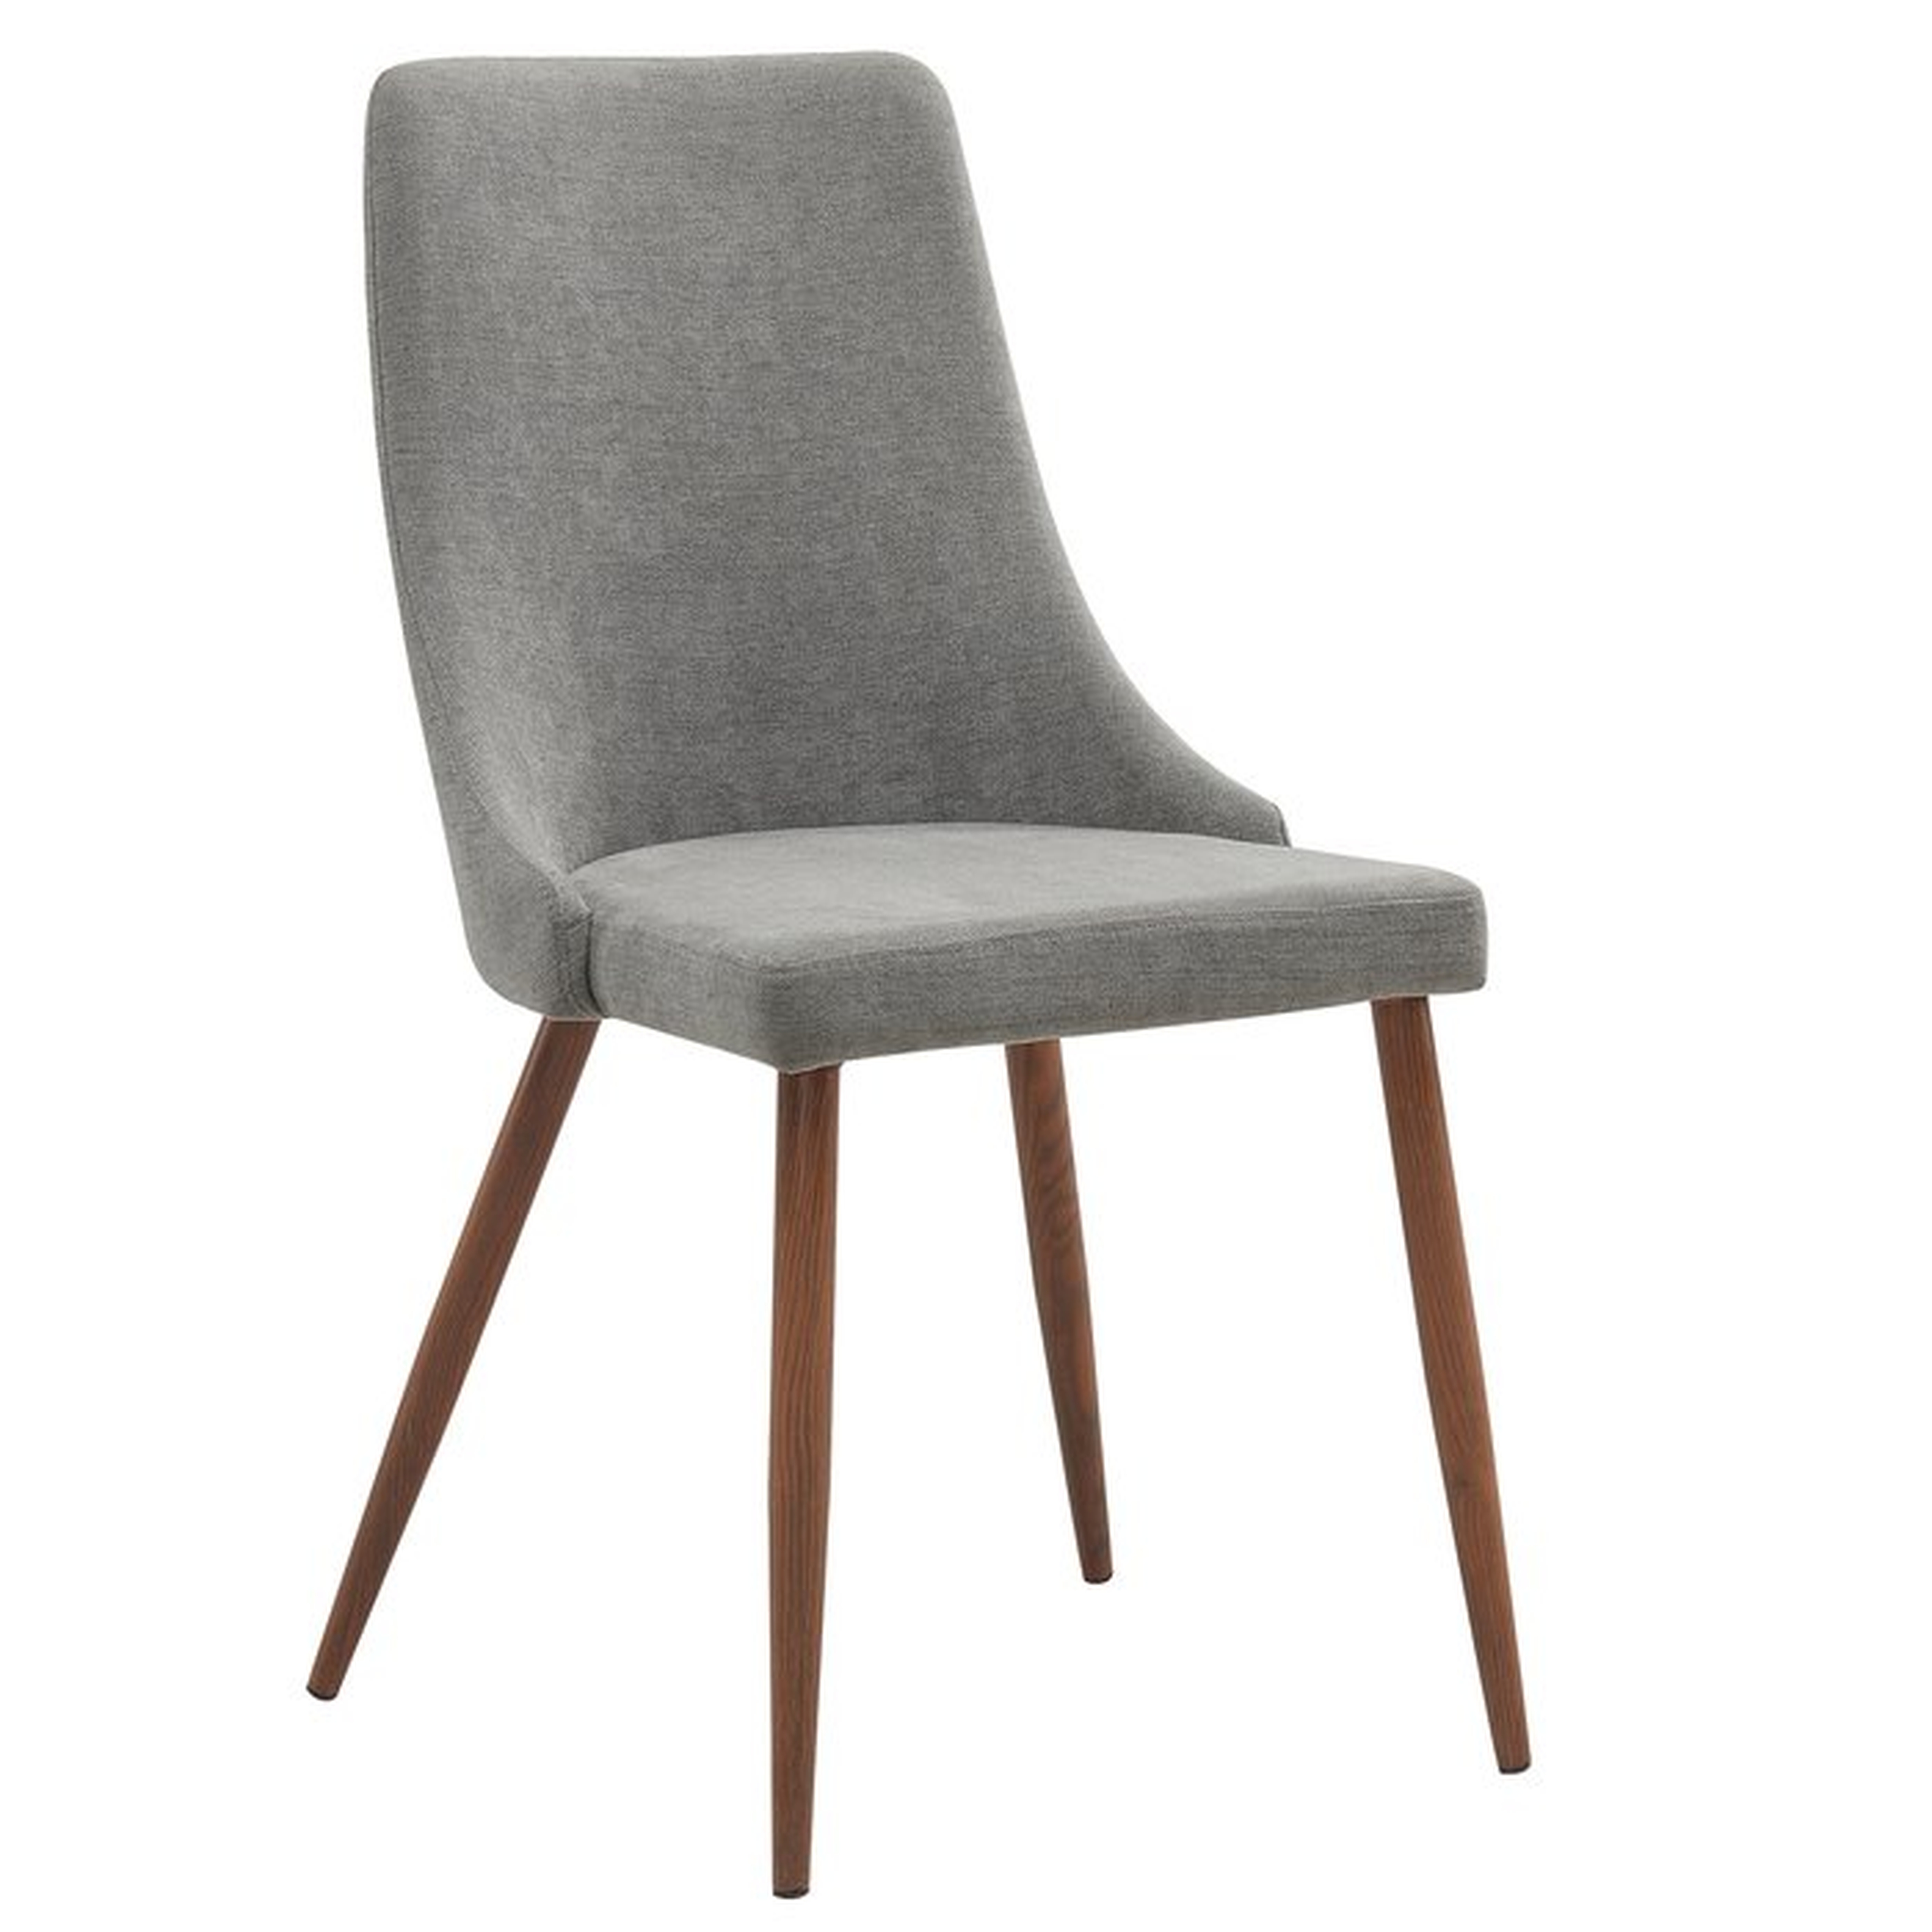 Aldina Upholstered Dining Chair, gray, set of 2 - Wayfair